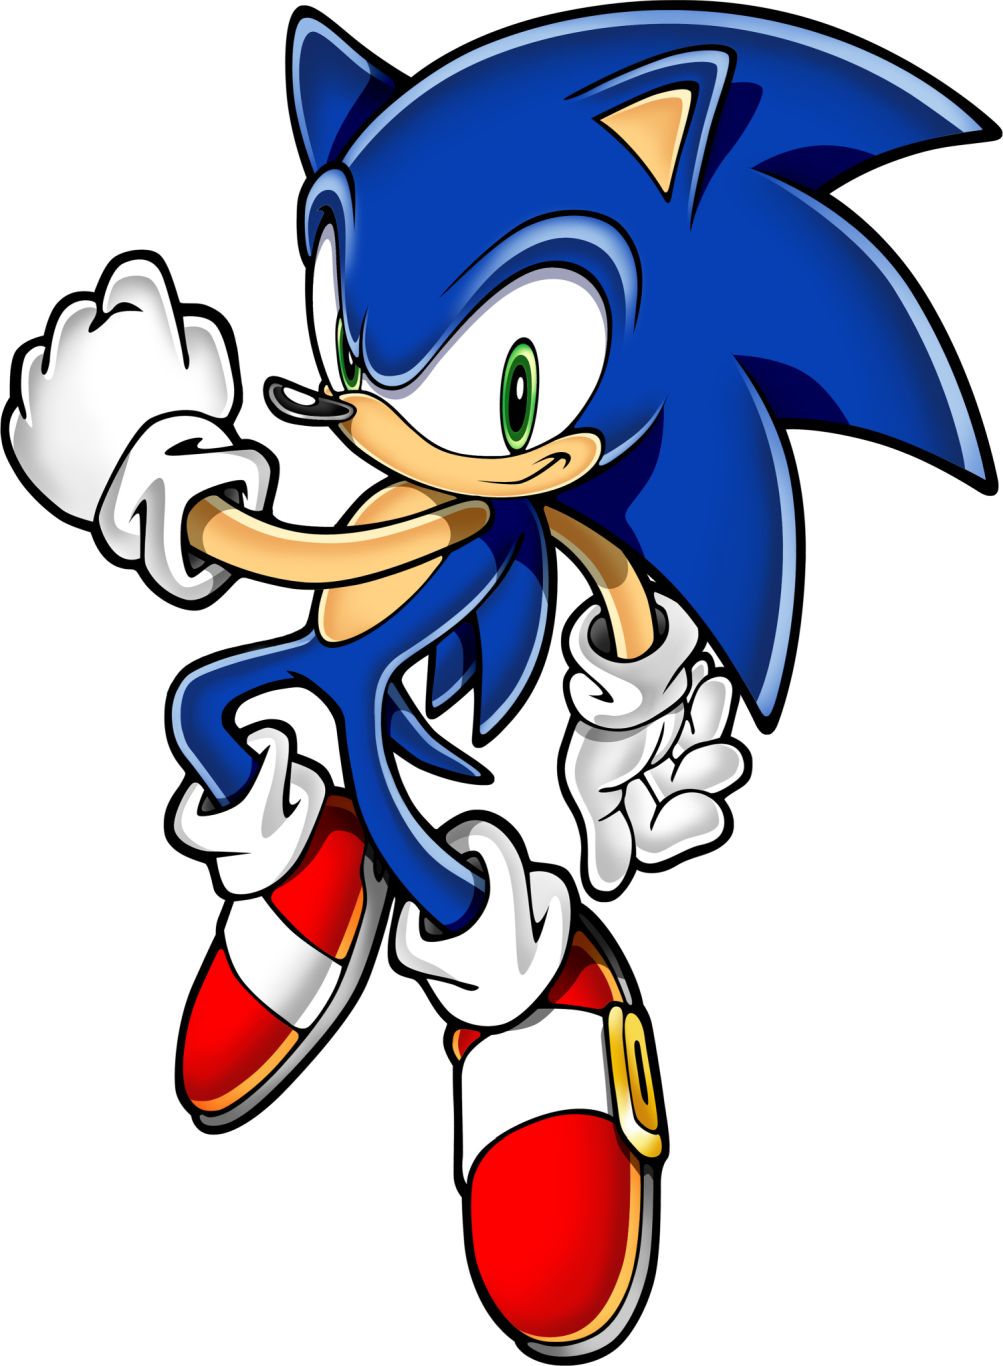 Sonic the Hedgehog    图片编号:104467